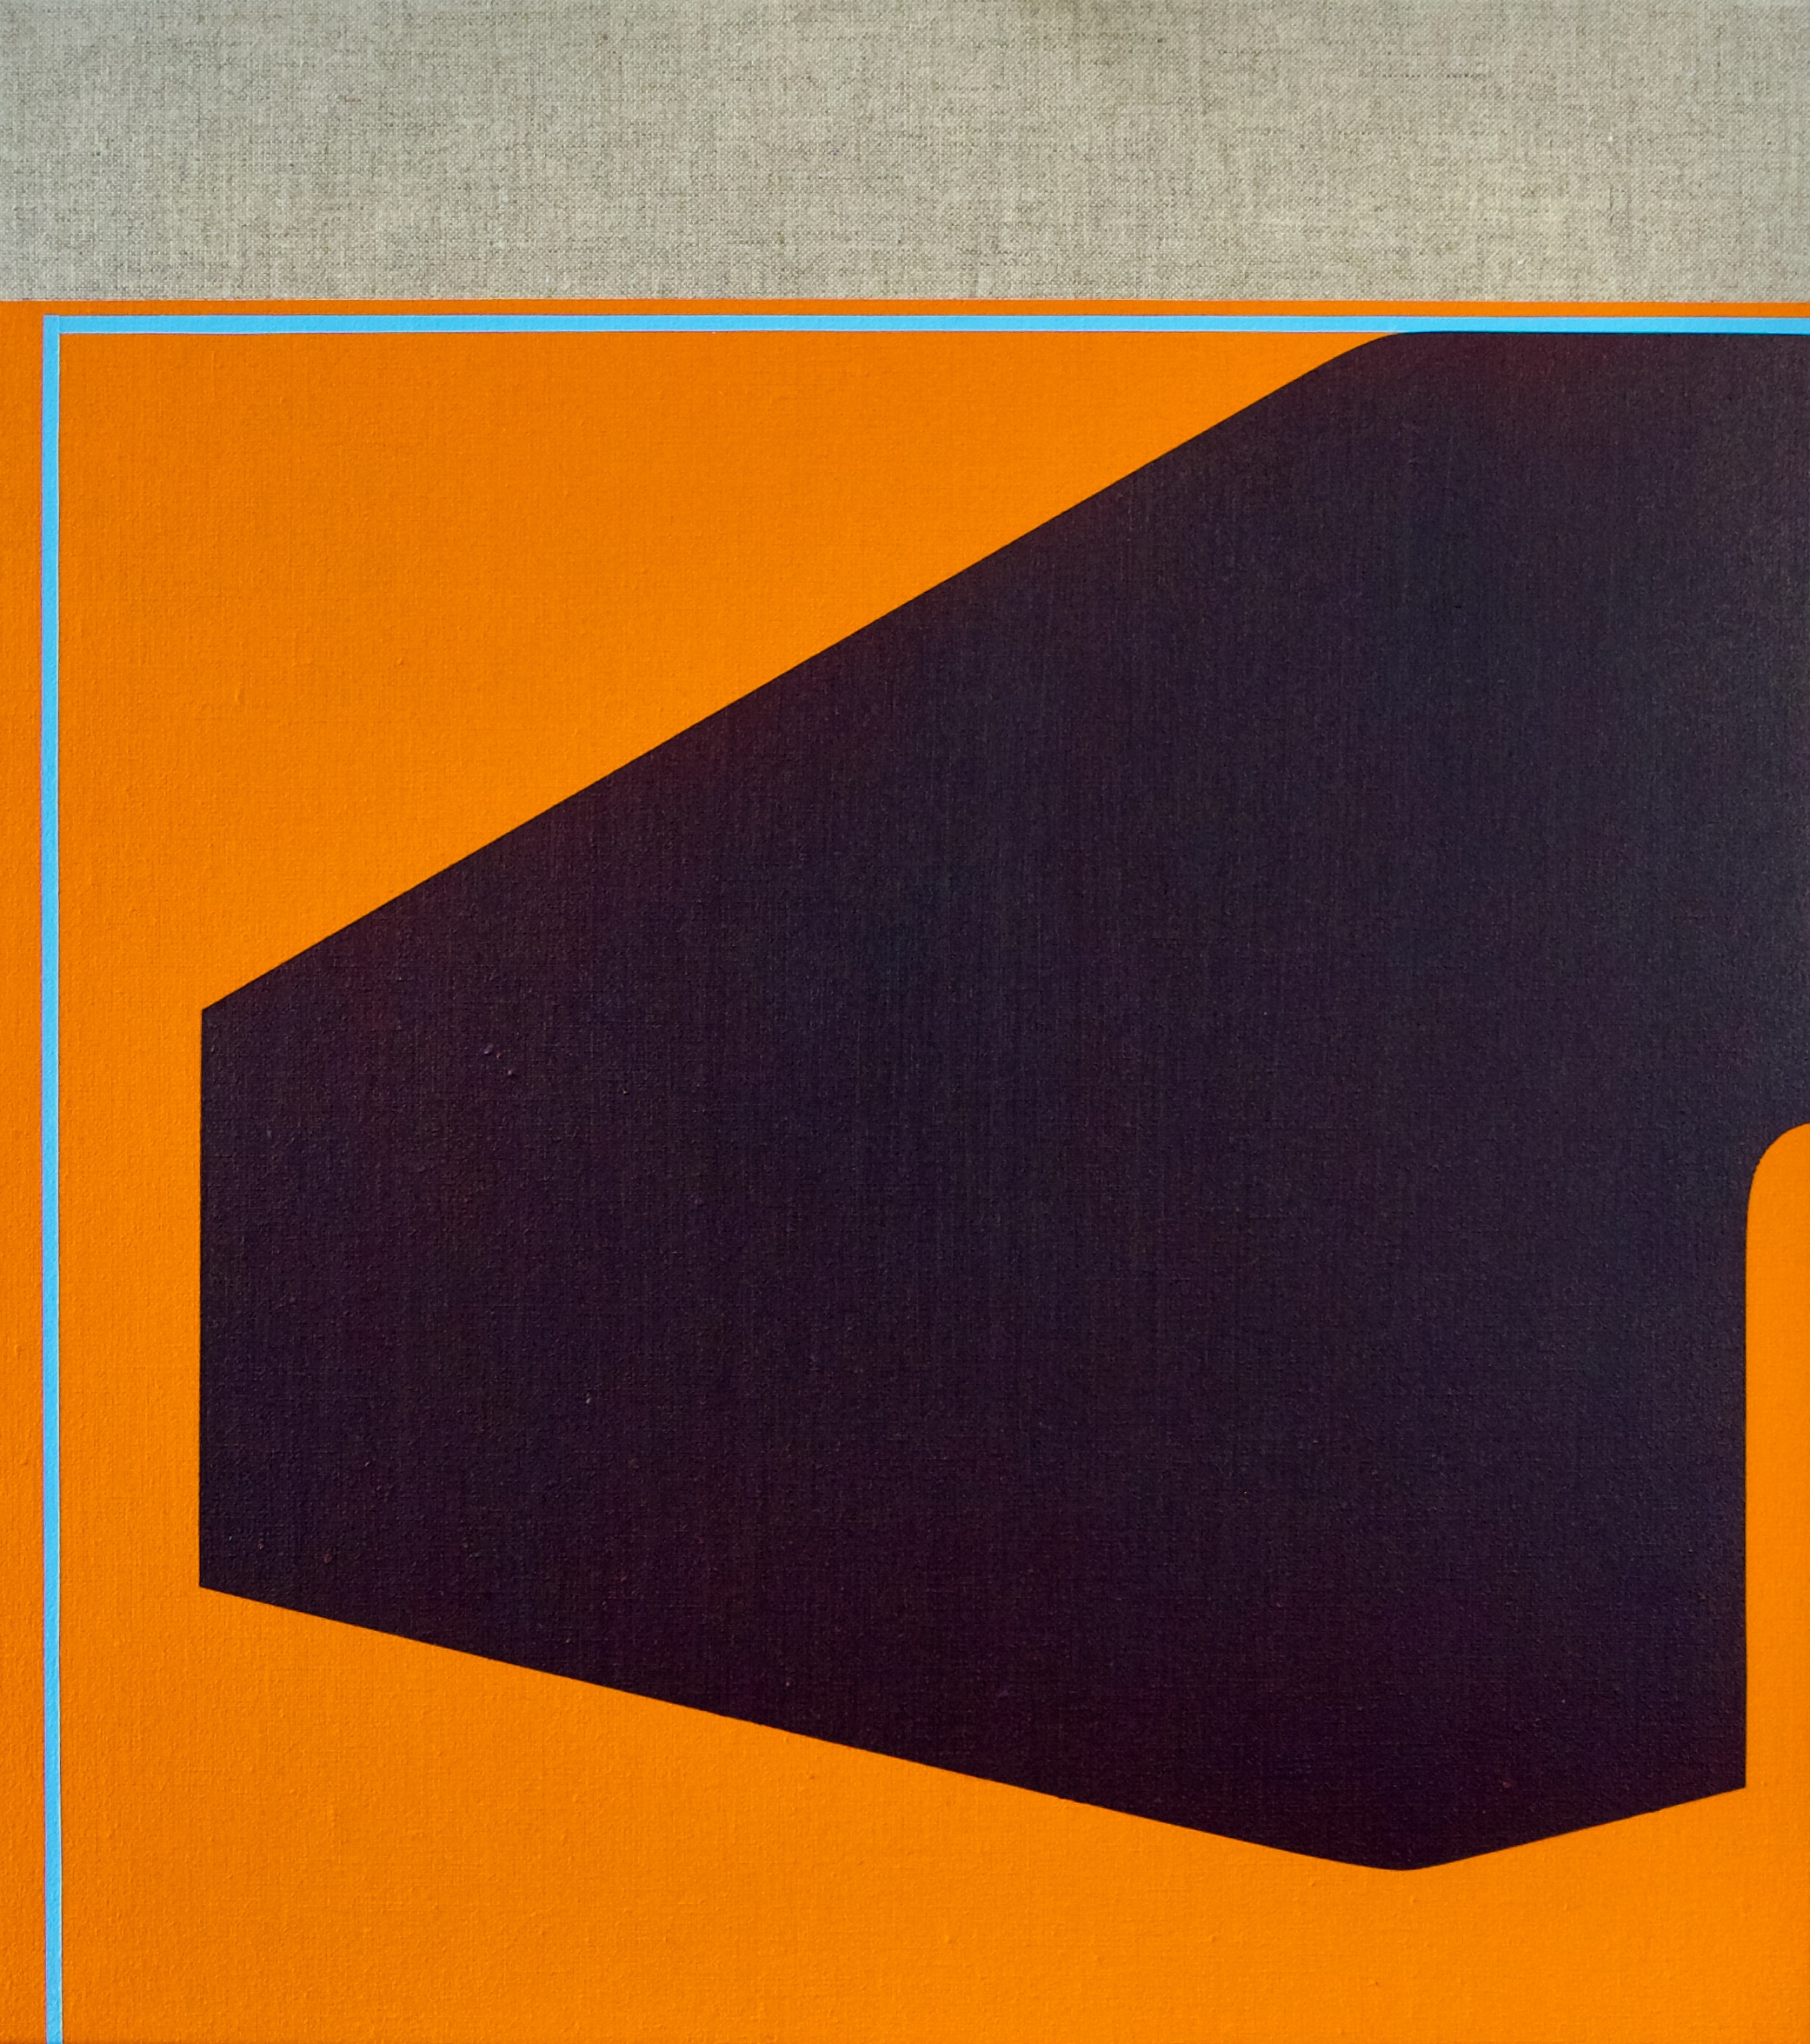 Matthew Browne 'Morii 16' vinyl tempera and oil on linen 45.5 x 40.5cm $4,600